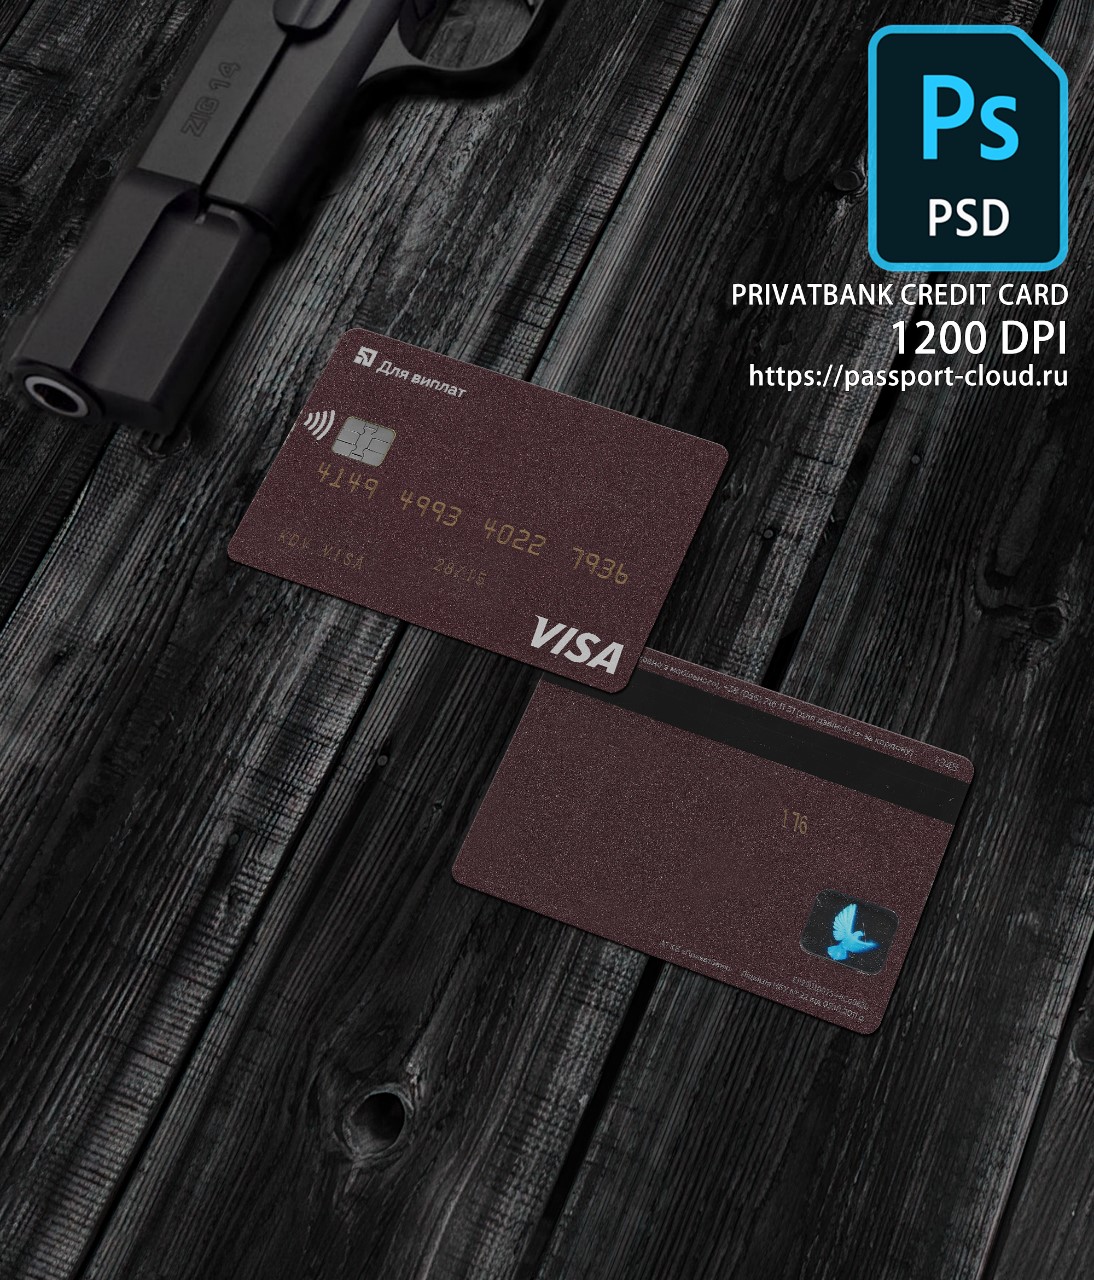 PrivatBank Credit Card PSD1